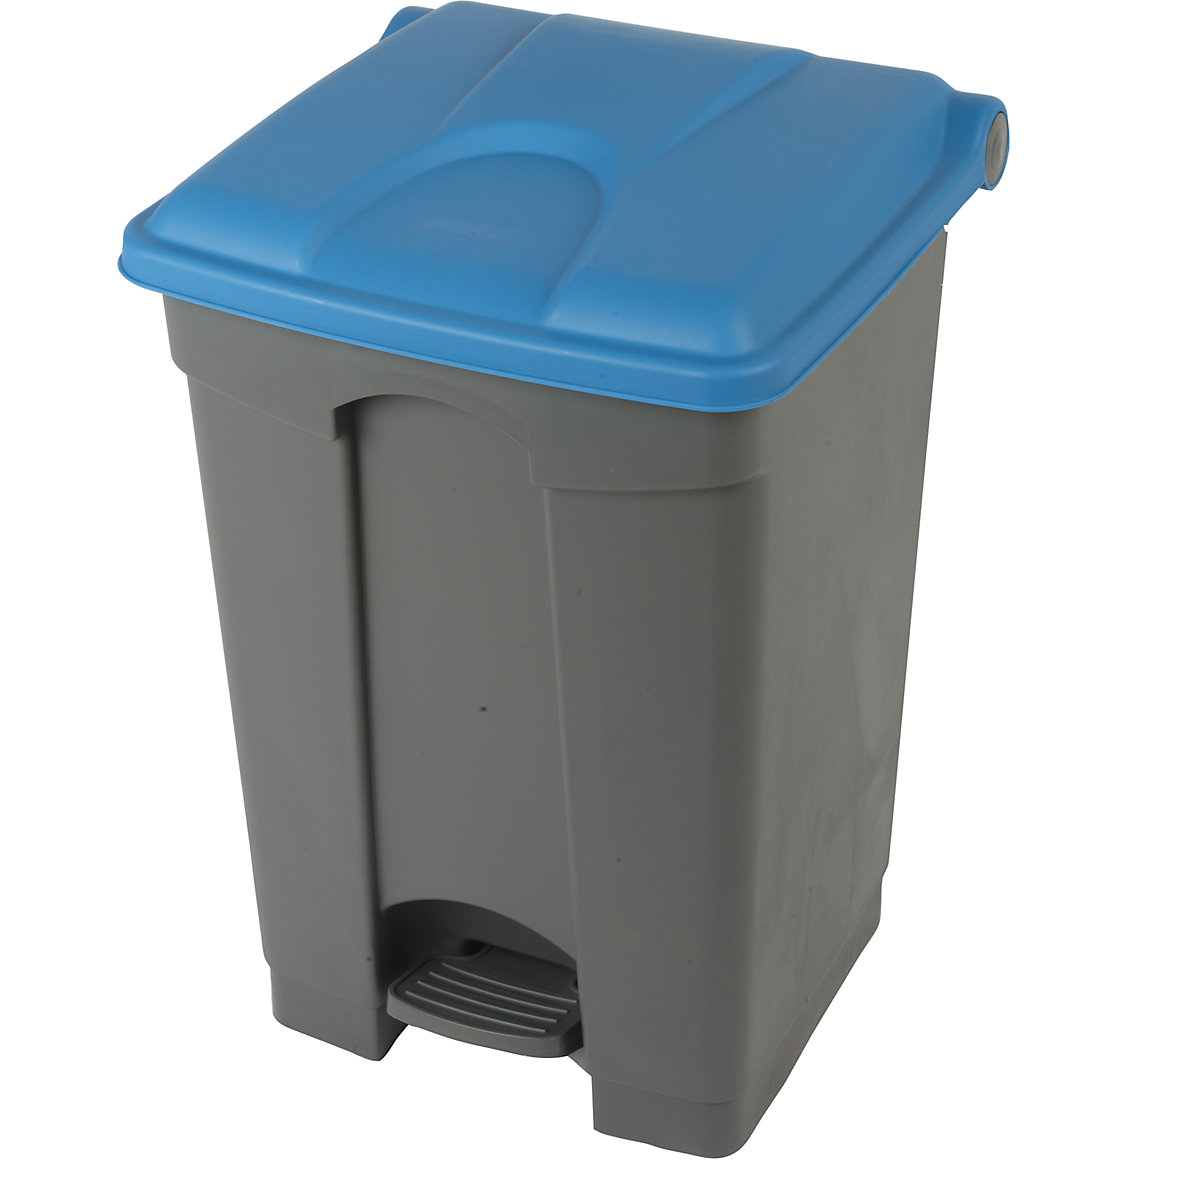 EUROKRAFTbasic – Afvalverzamelaar met pedaal, inhoud 45 l, b x h x d = 410 x 600 x 400 mm, grijs, deksel blauw